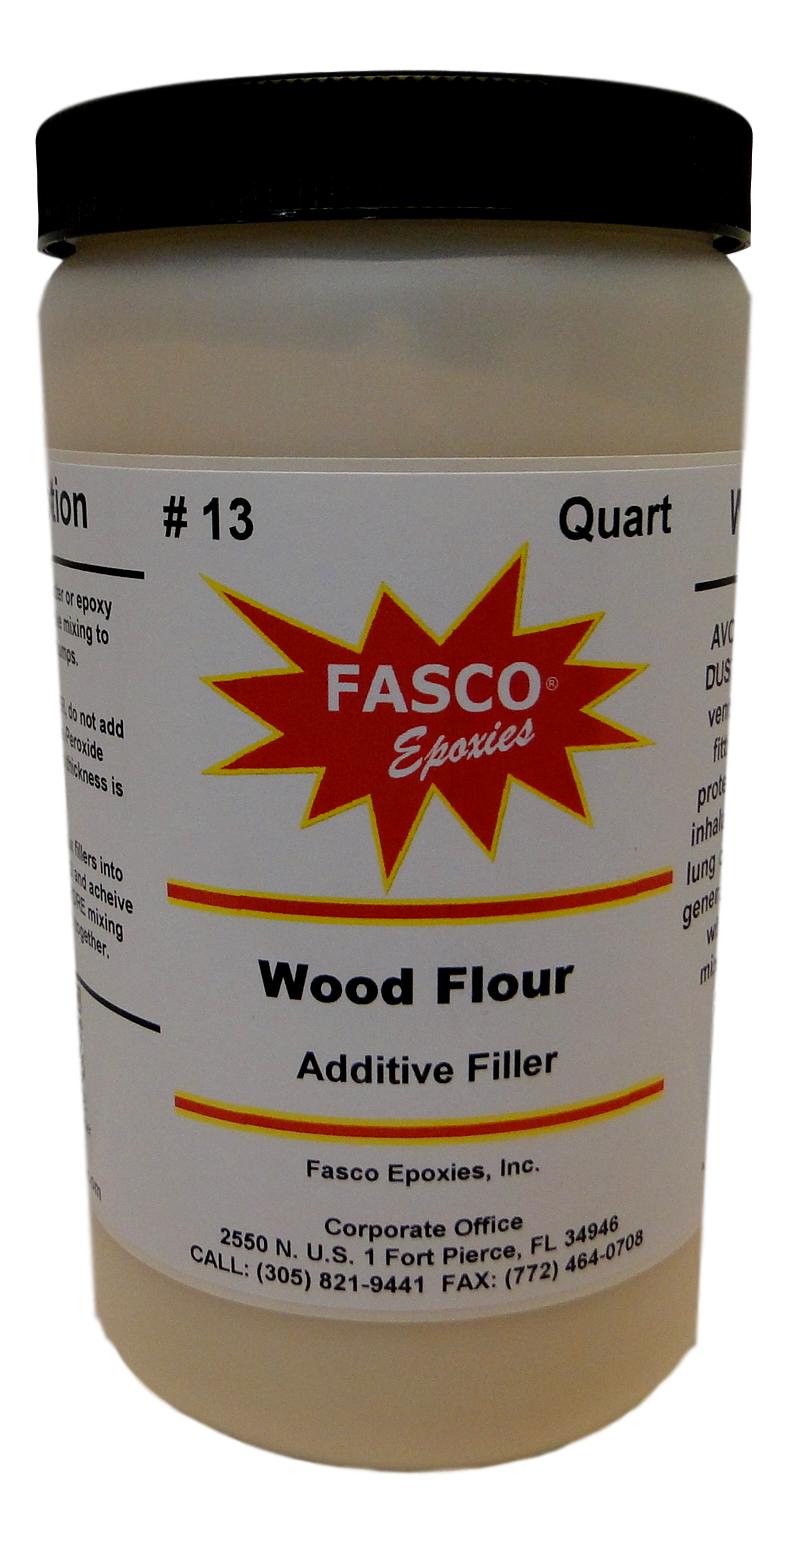 Wood Flour Additive